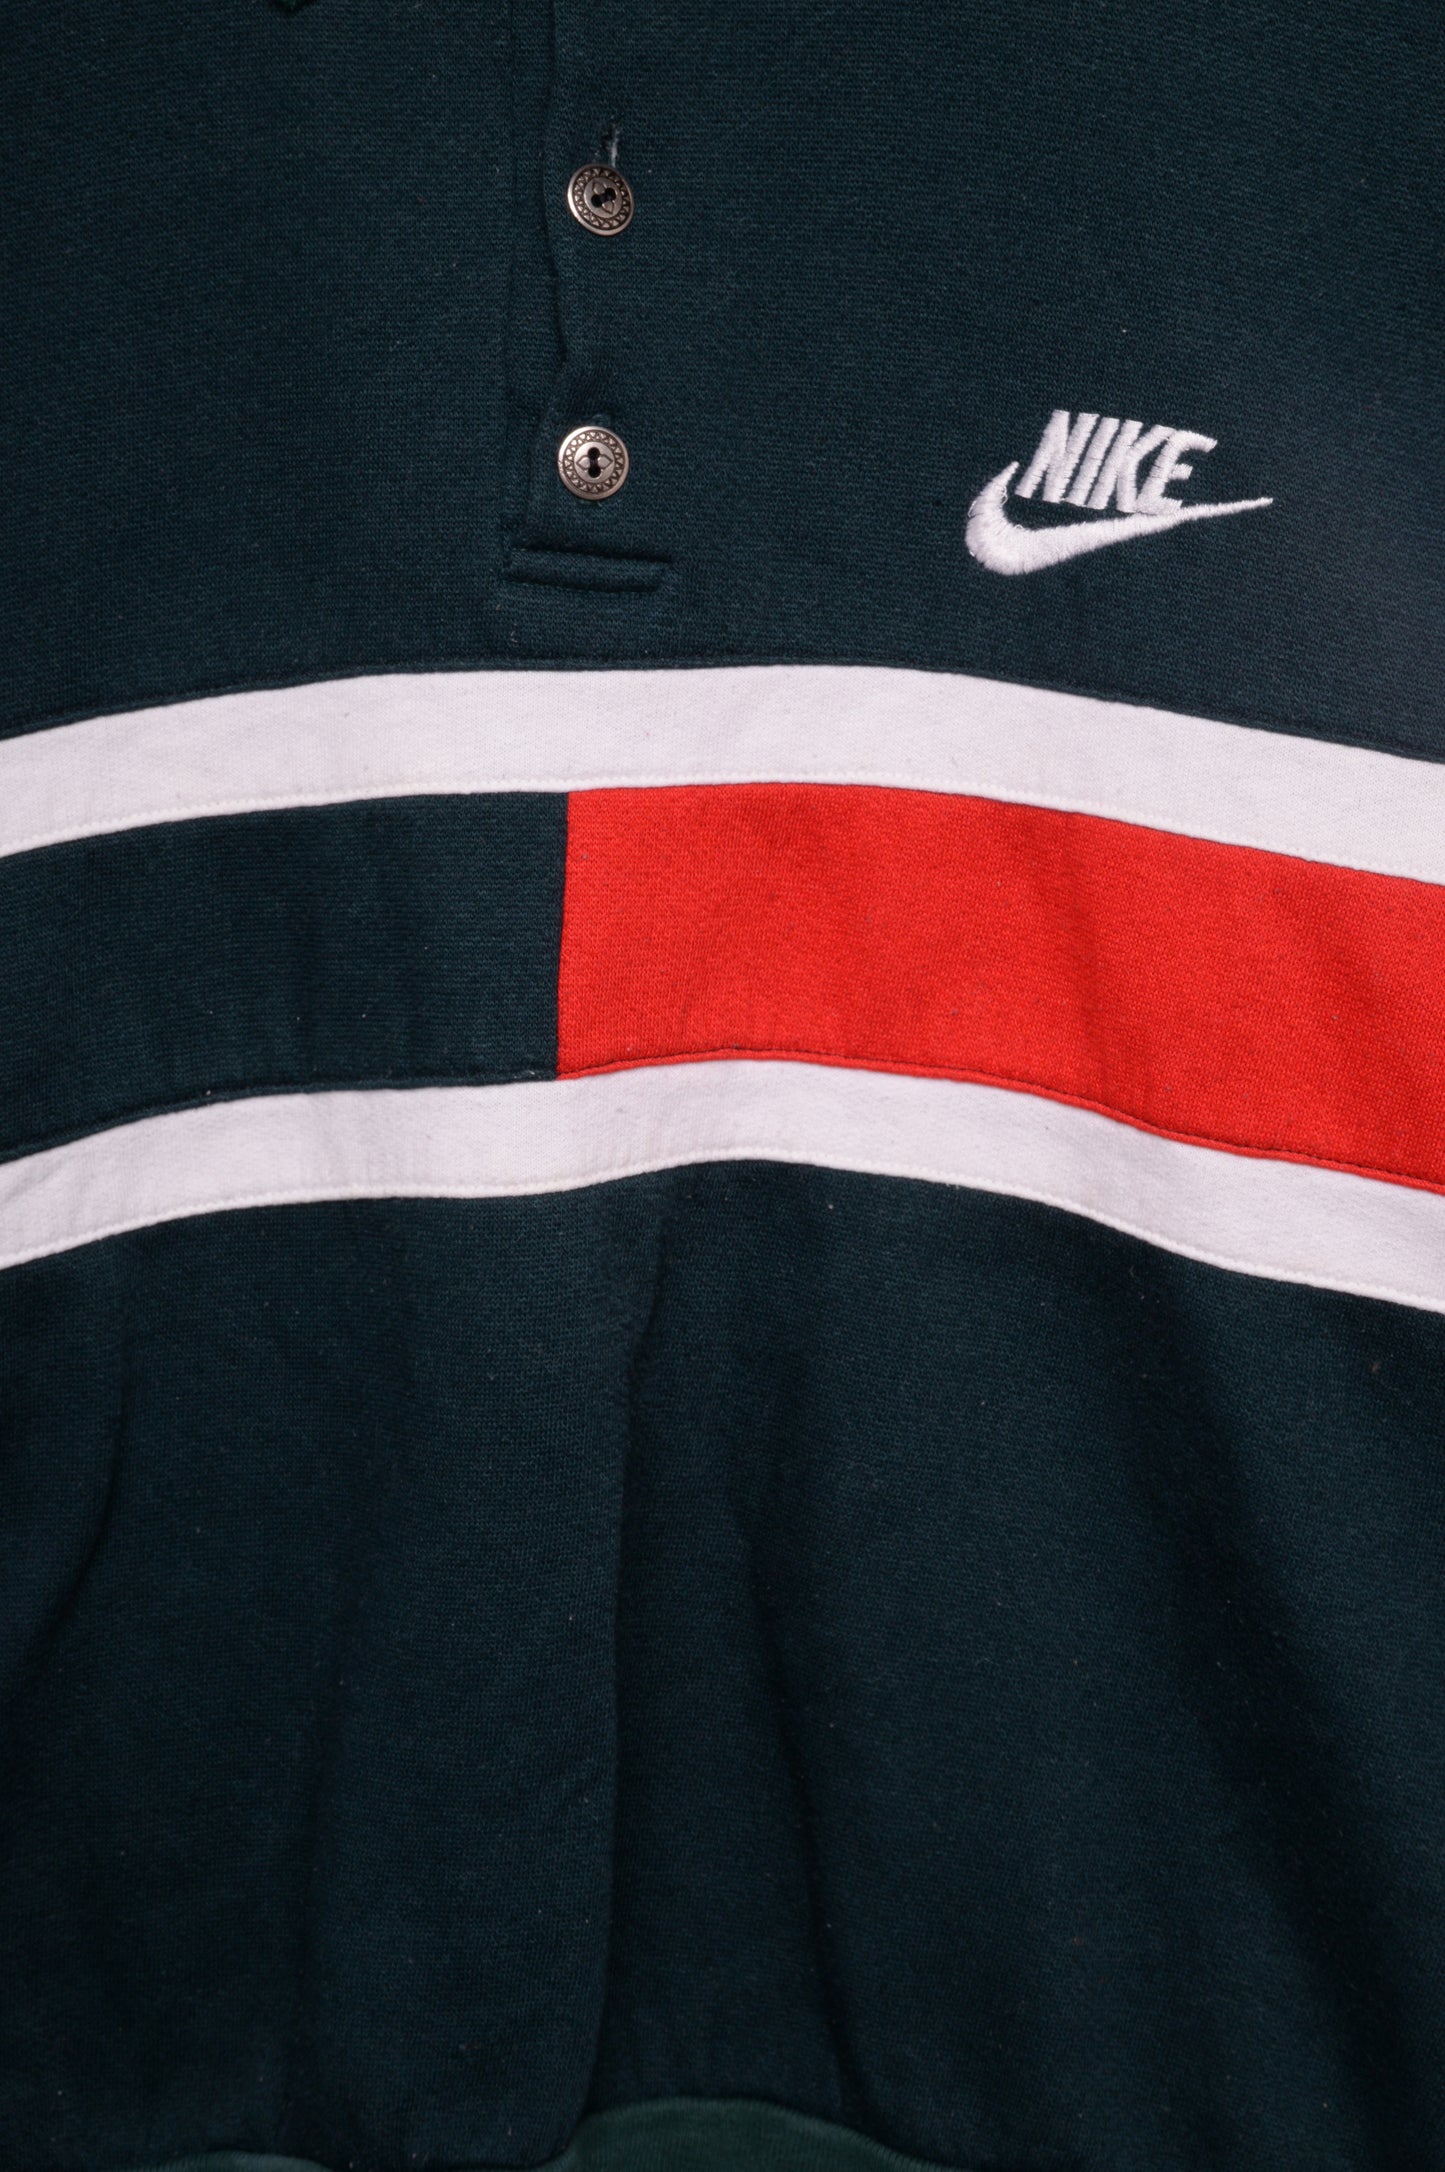 USA Nike Collared Sweatshirt